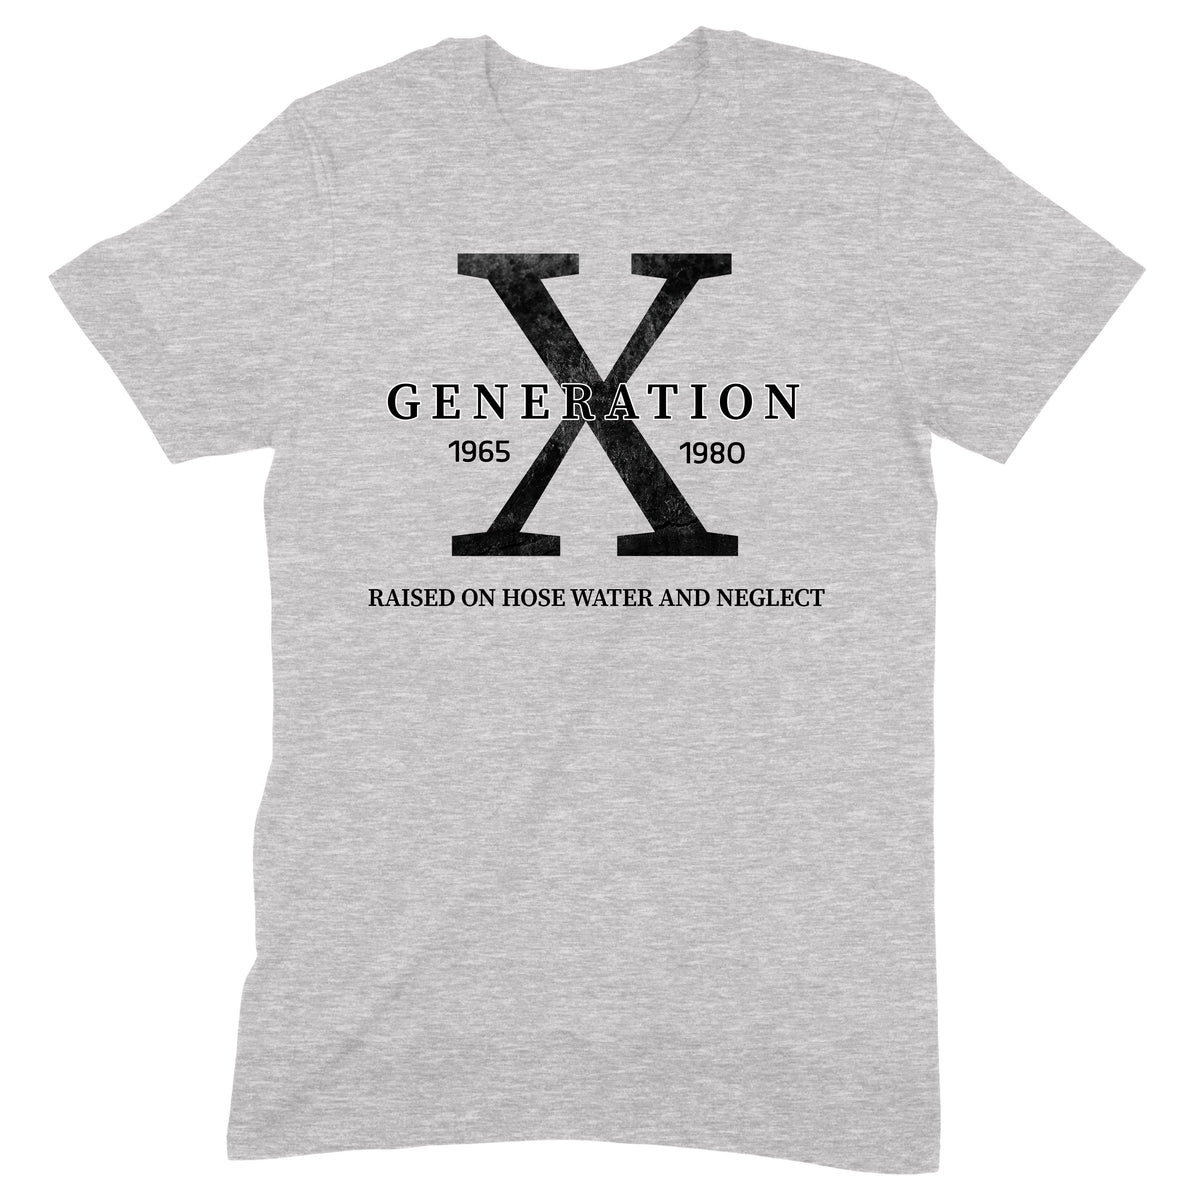 "Generation X" Premium Midweight Ringspun Cotton T-Shirt - Mens/Womens Fits